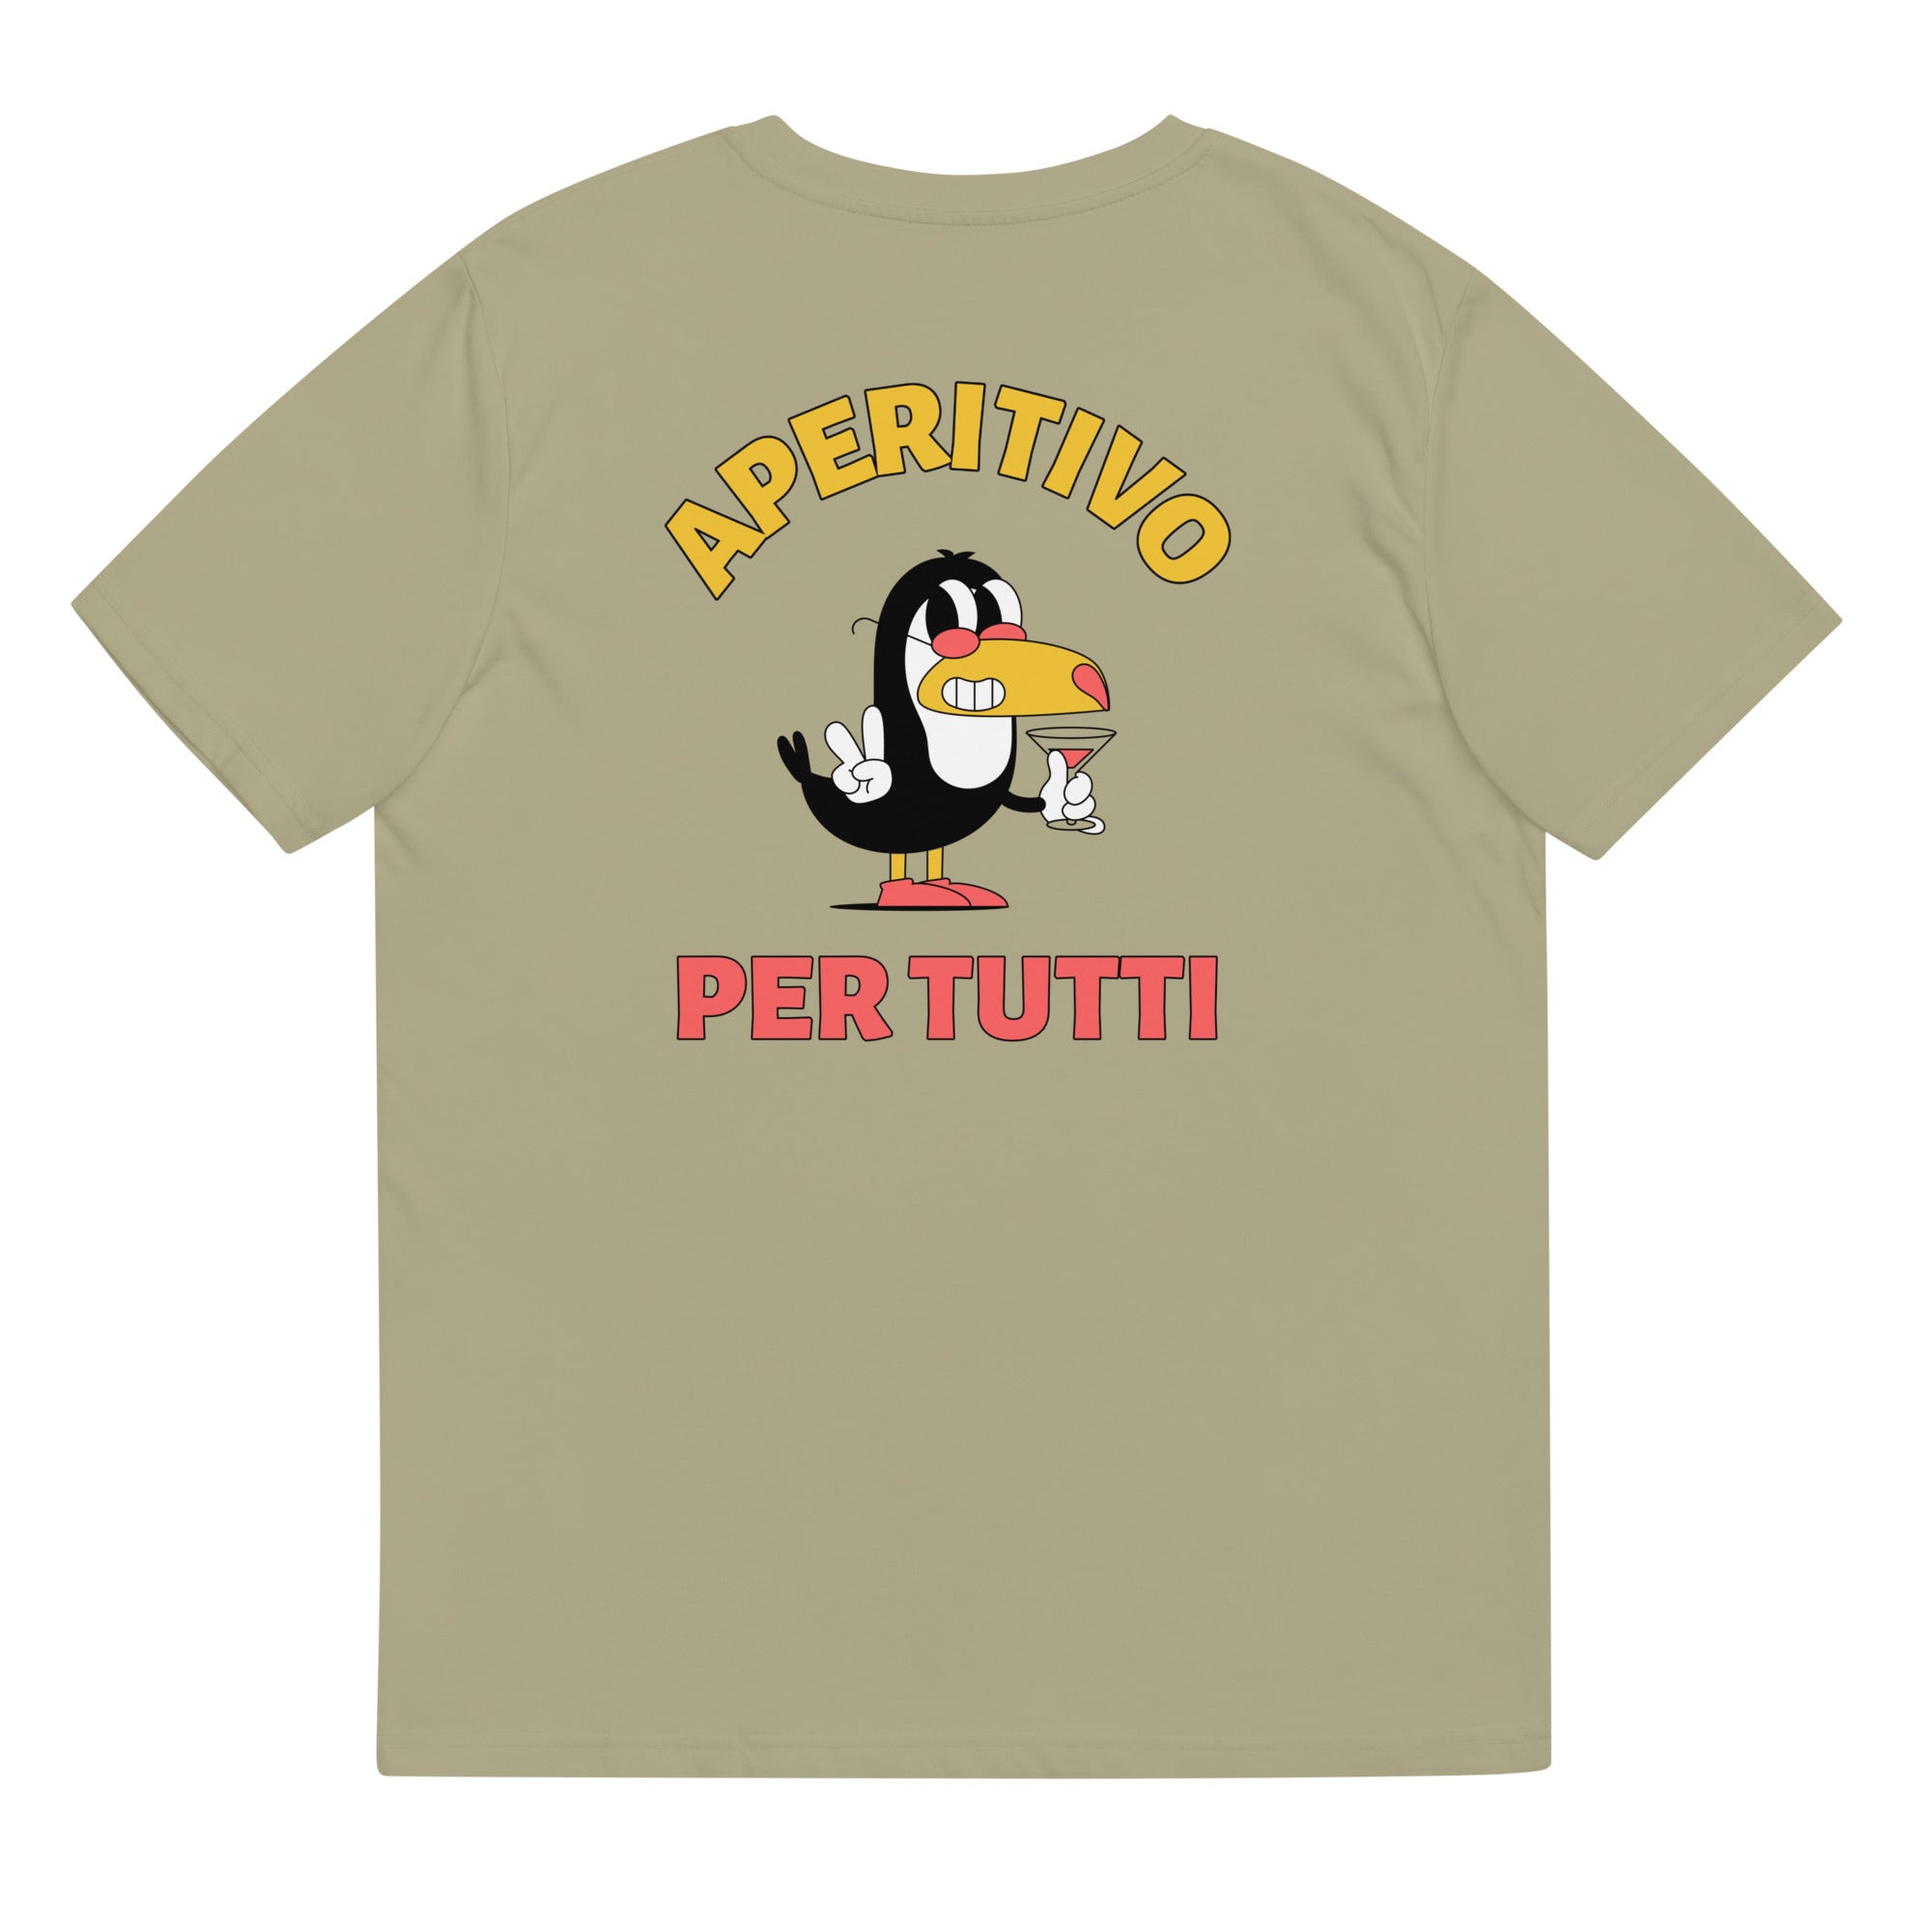 Aperitivo Per Tutti - Organic T-Shirt - The Refined Spirit